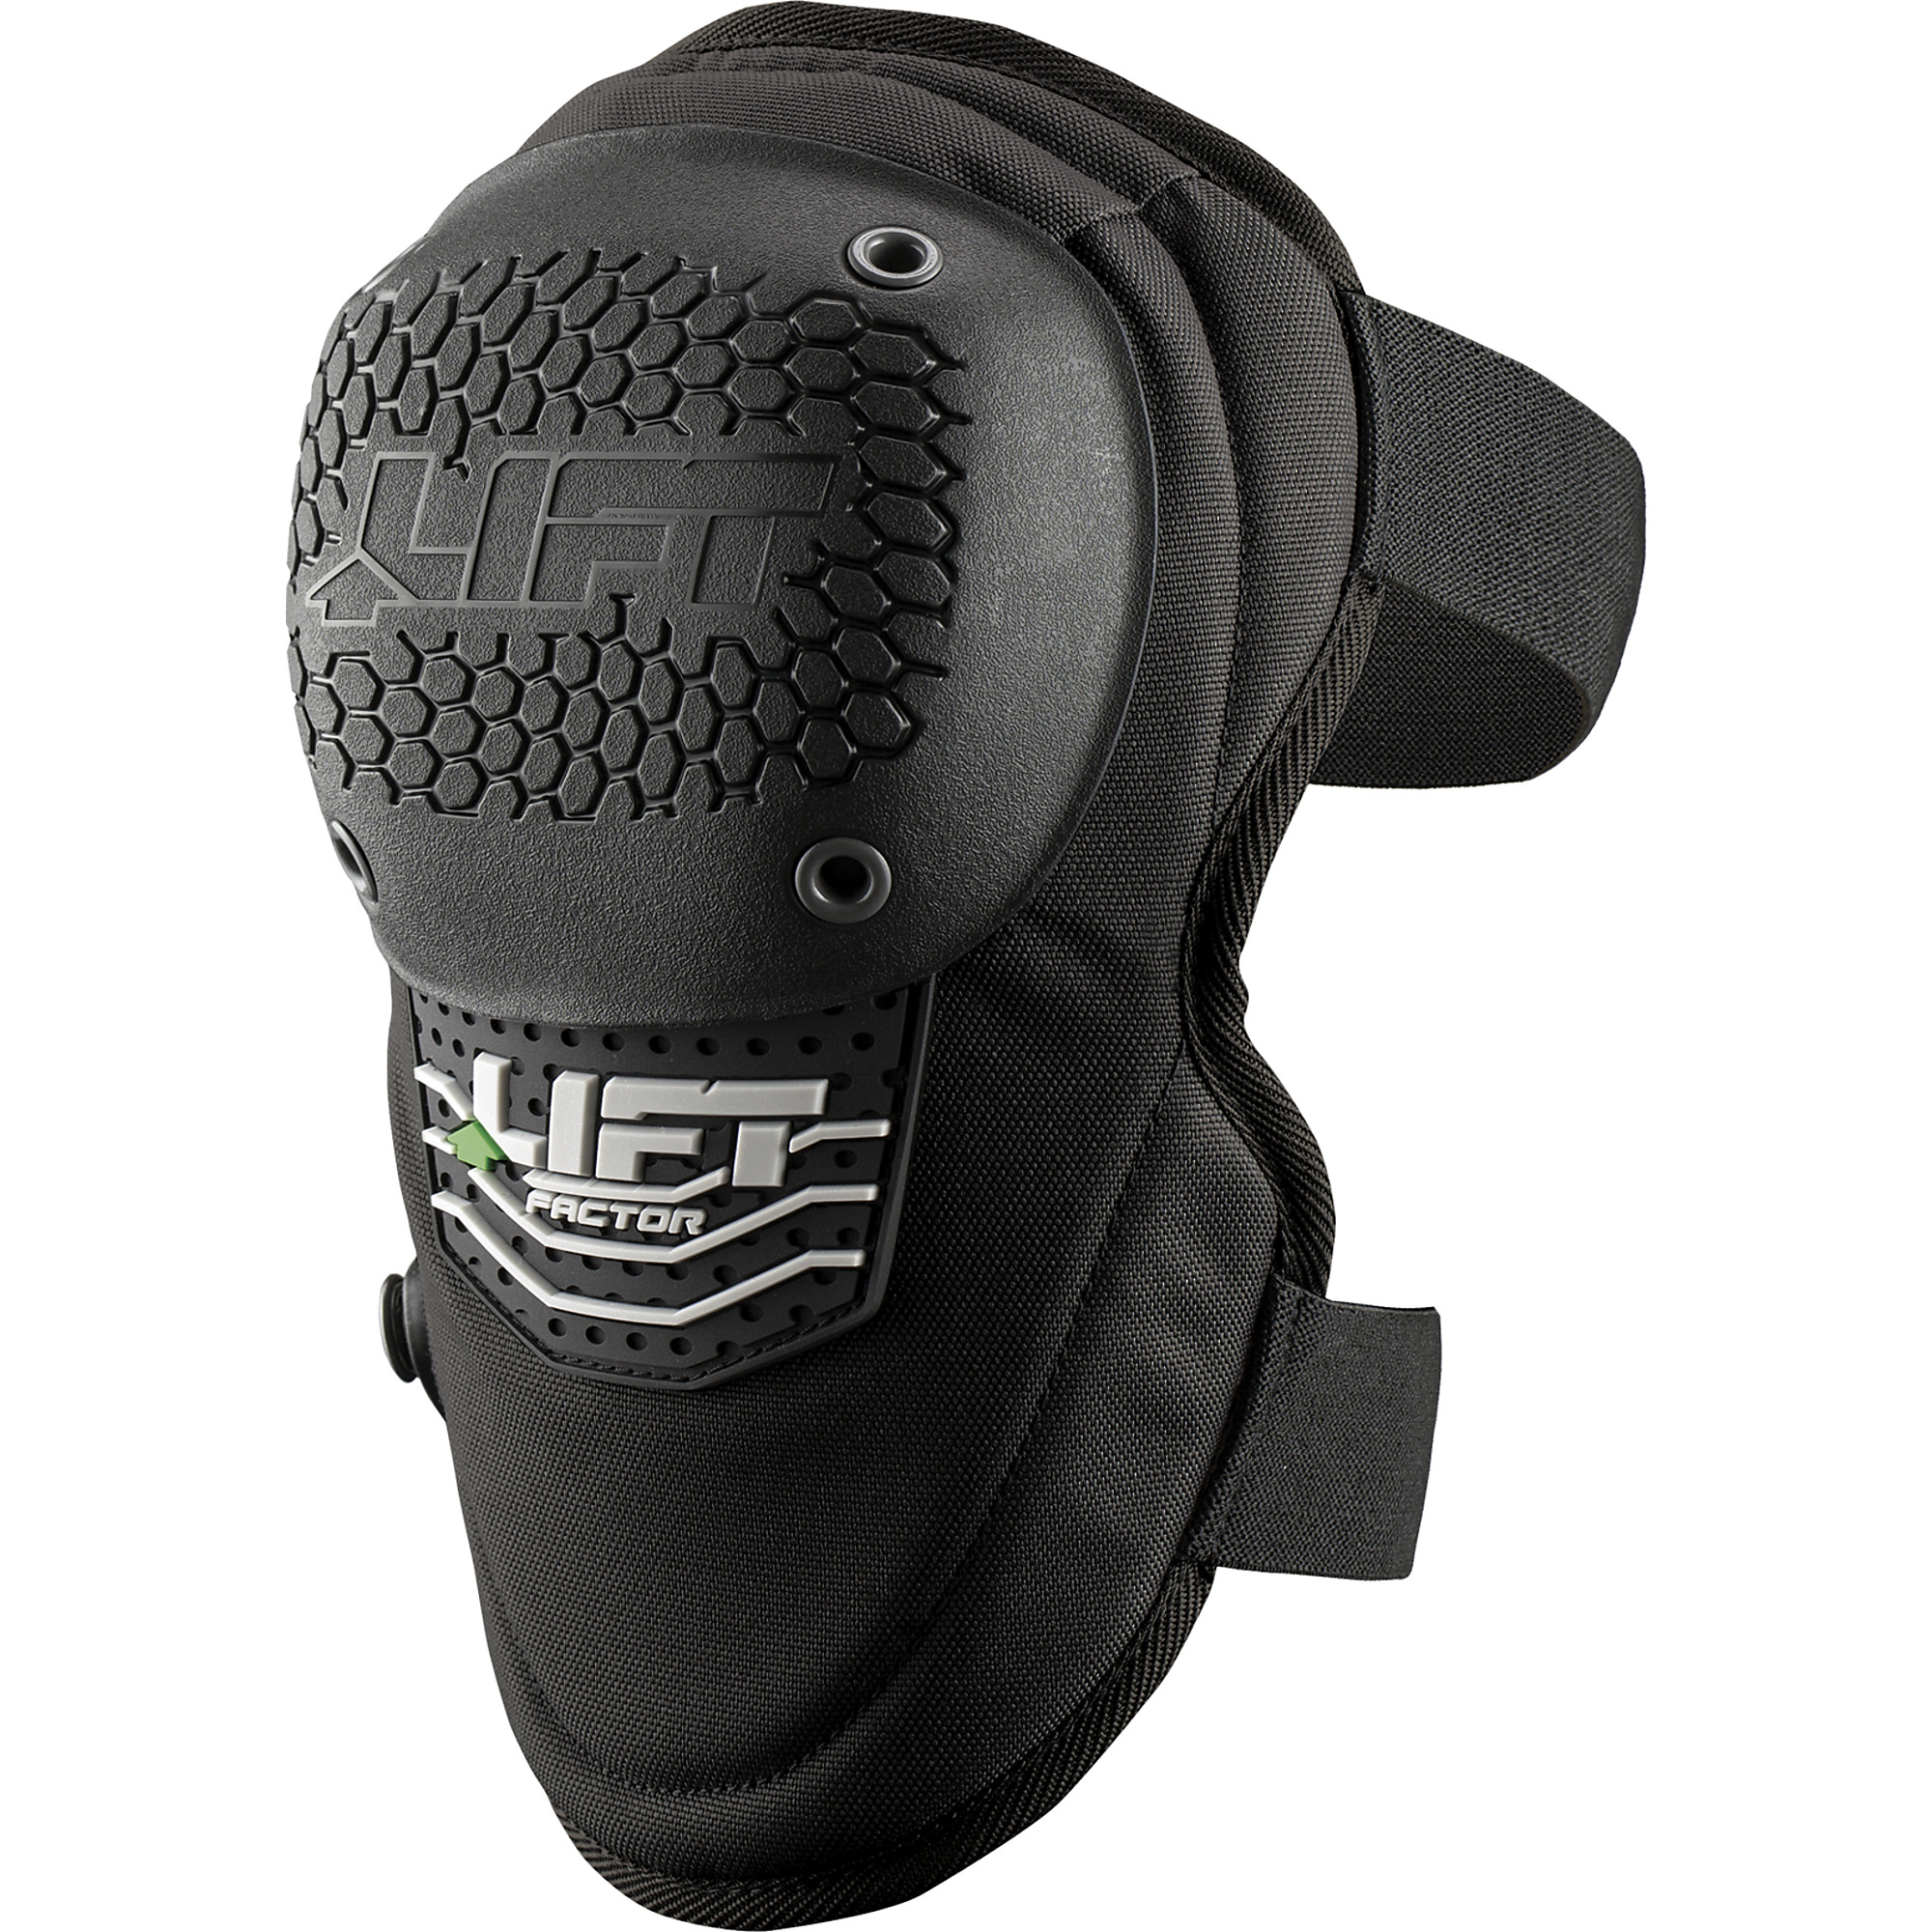 LIFT Safety, FACTOR Knee Guard, Included (qty.) 2, Color Black, Model KFR-0K